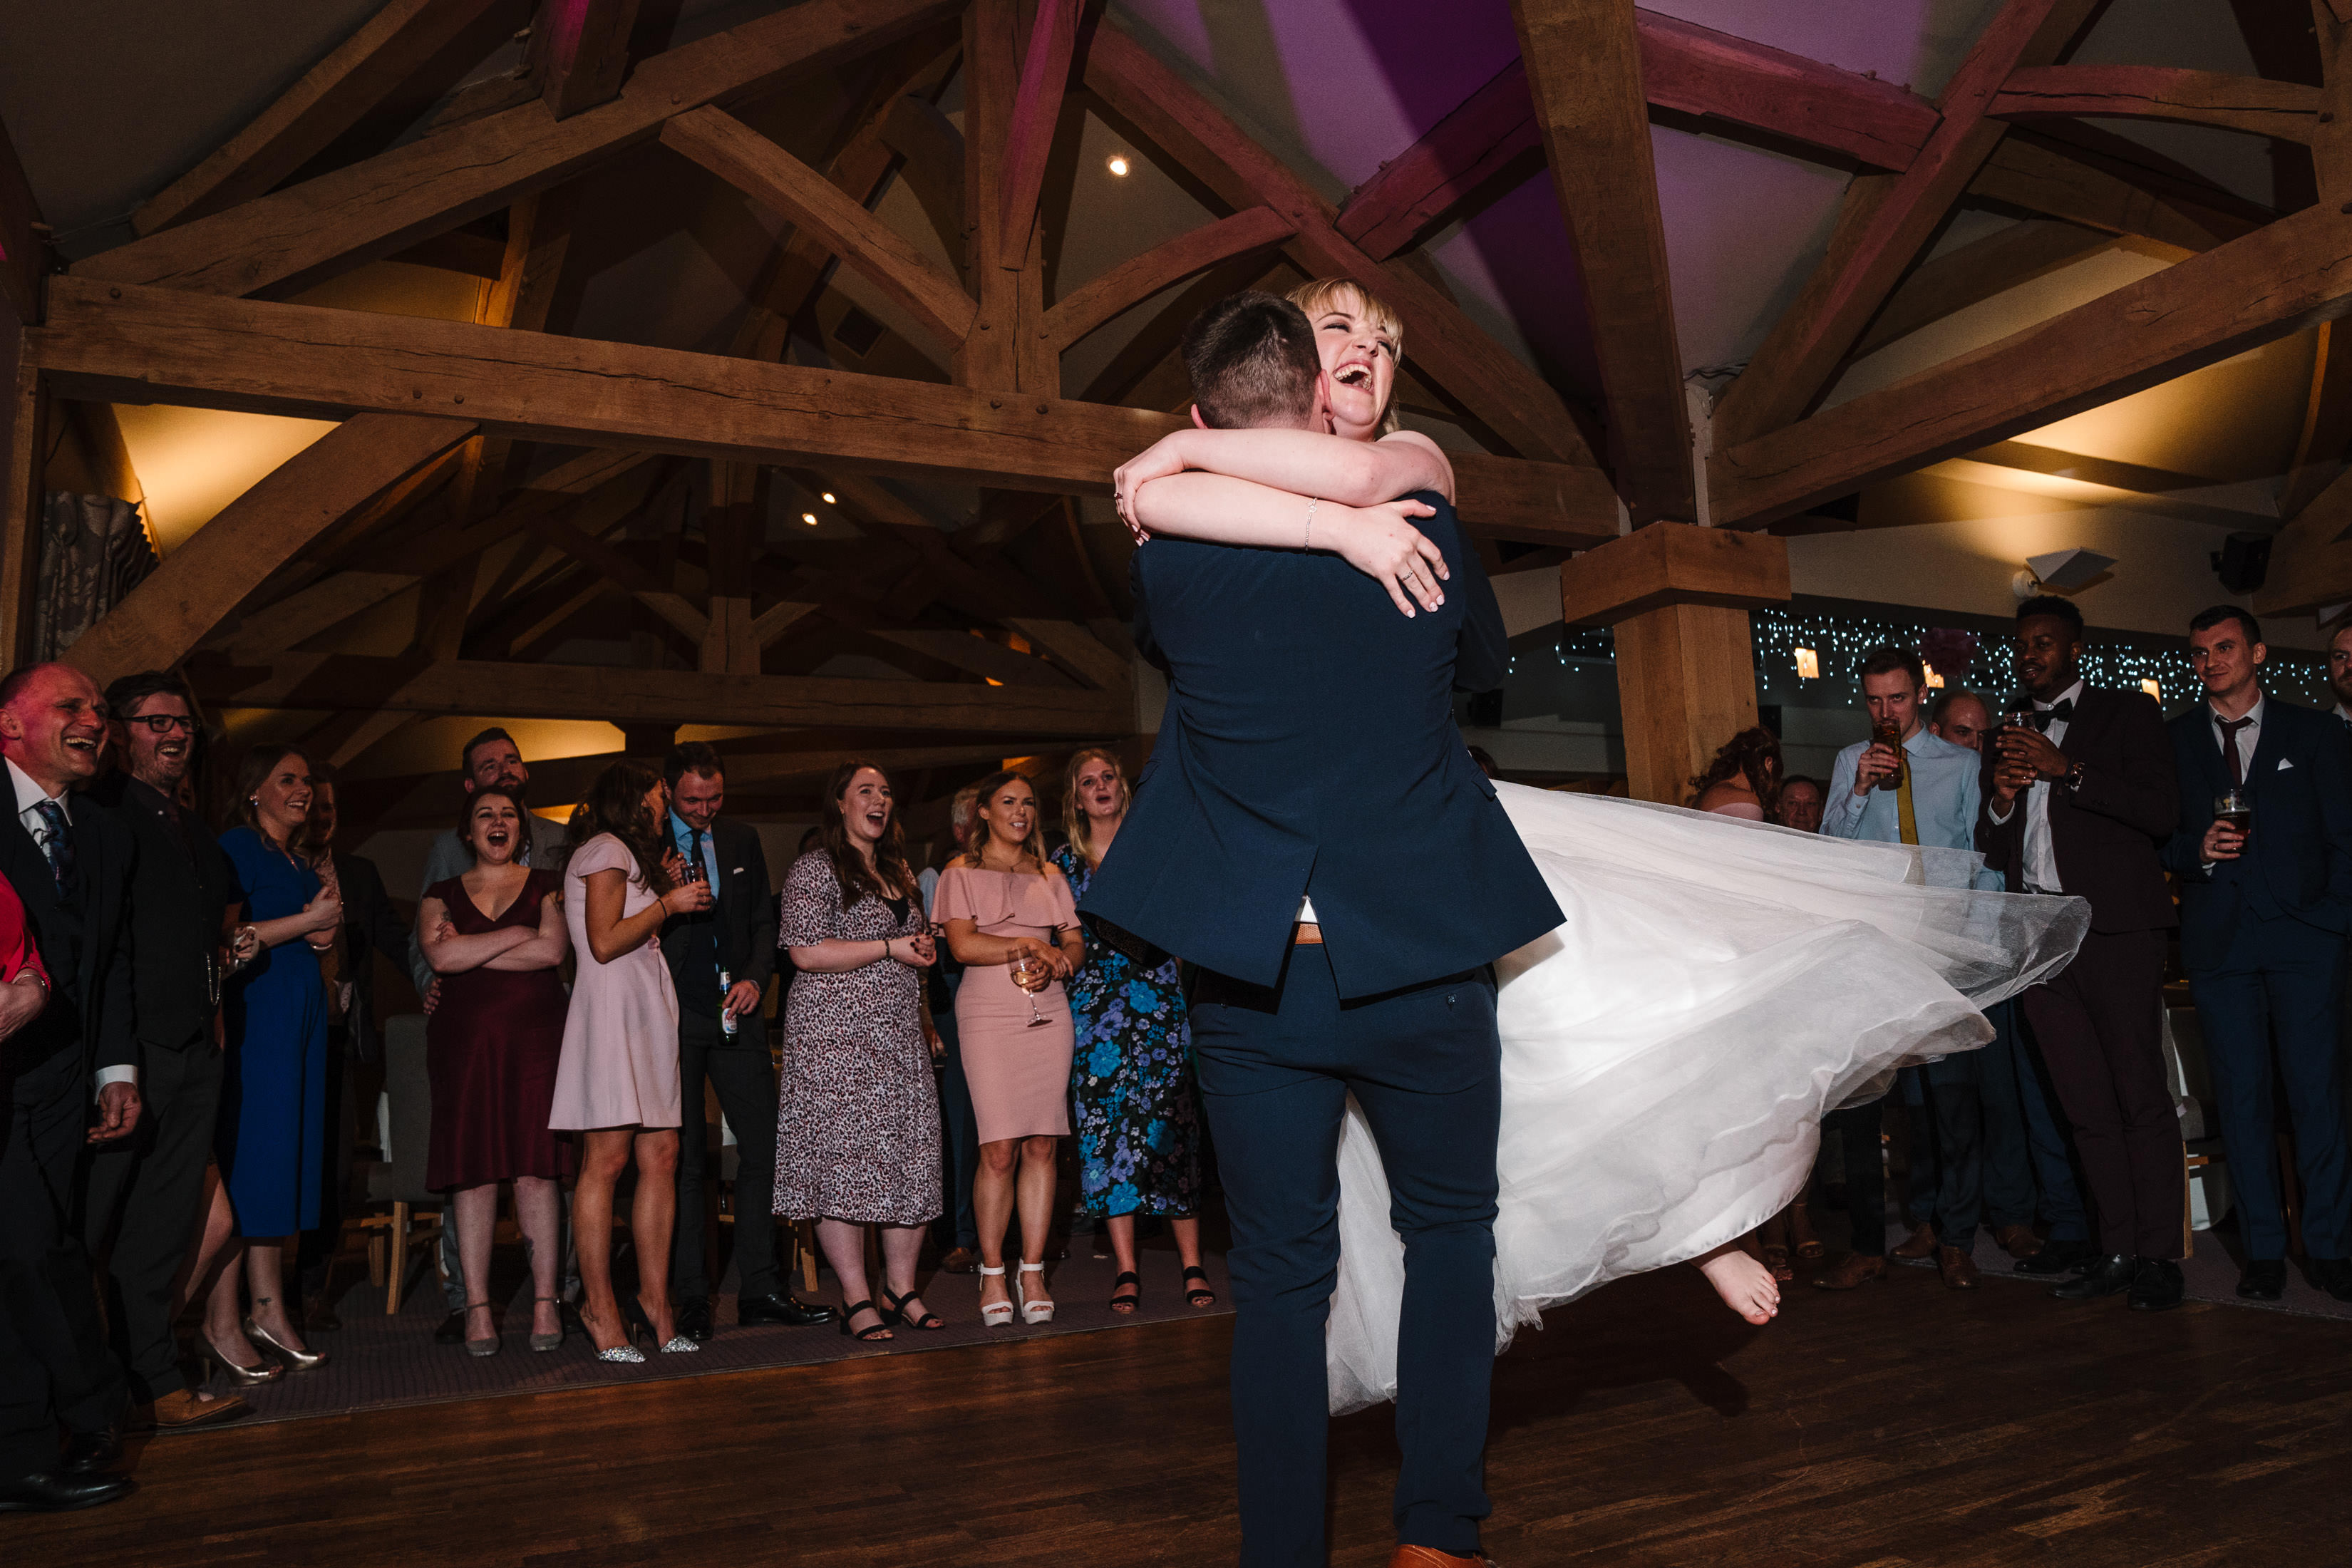 Groom swinging bride around during first dance, at white art inn wedding